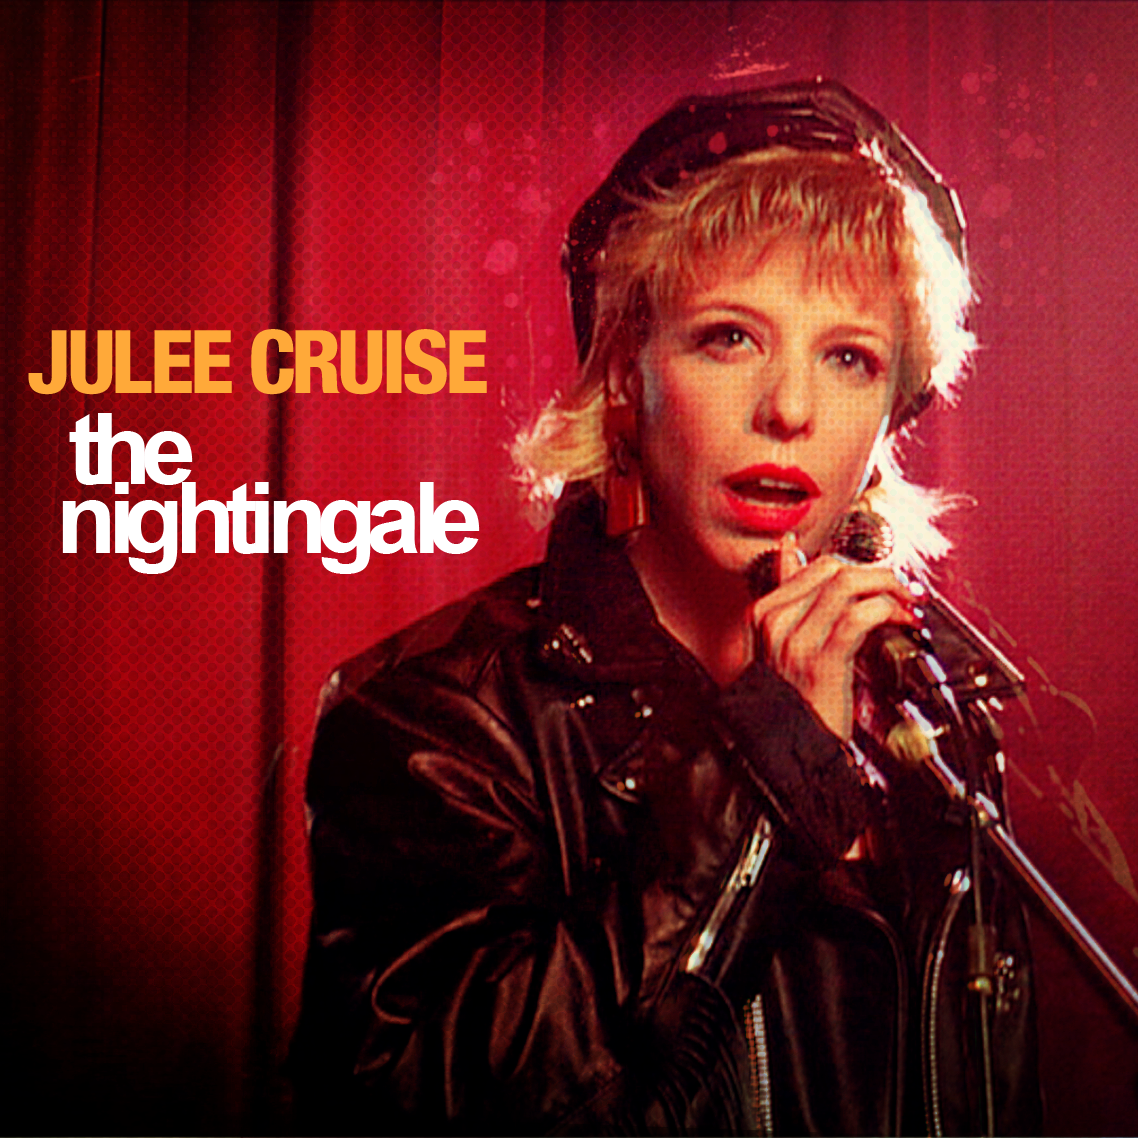 Julee cruise. Julee Cruise Nightingale Twin Peaks. Julee Cruise в молодости.